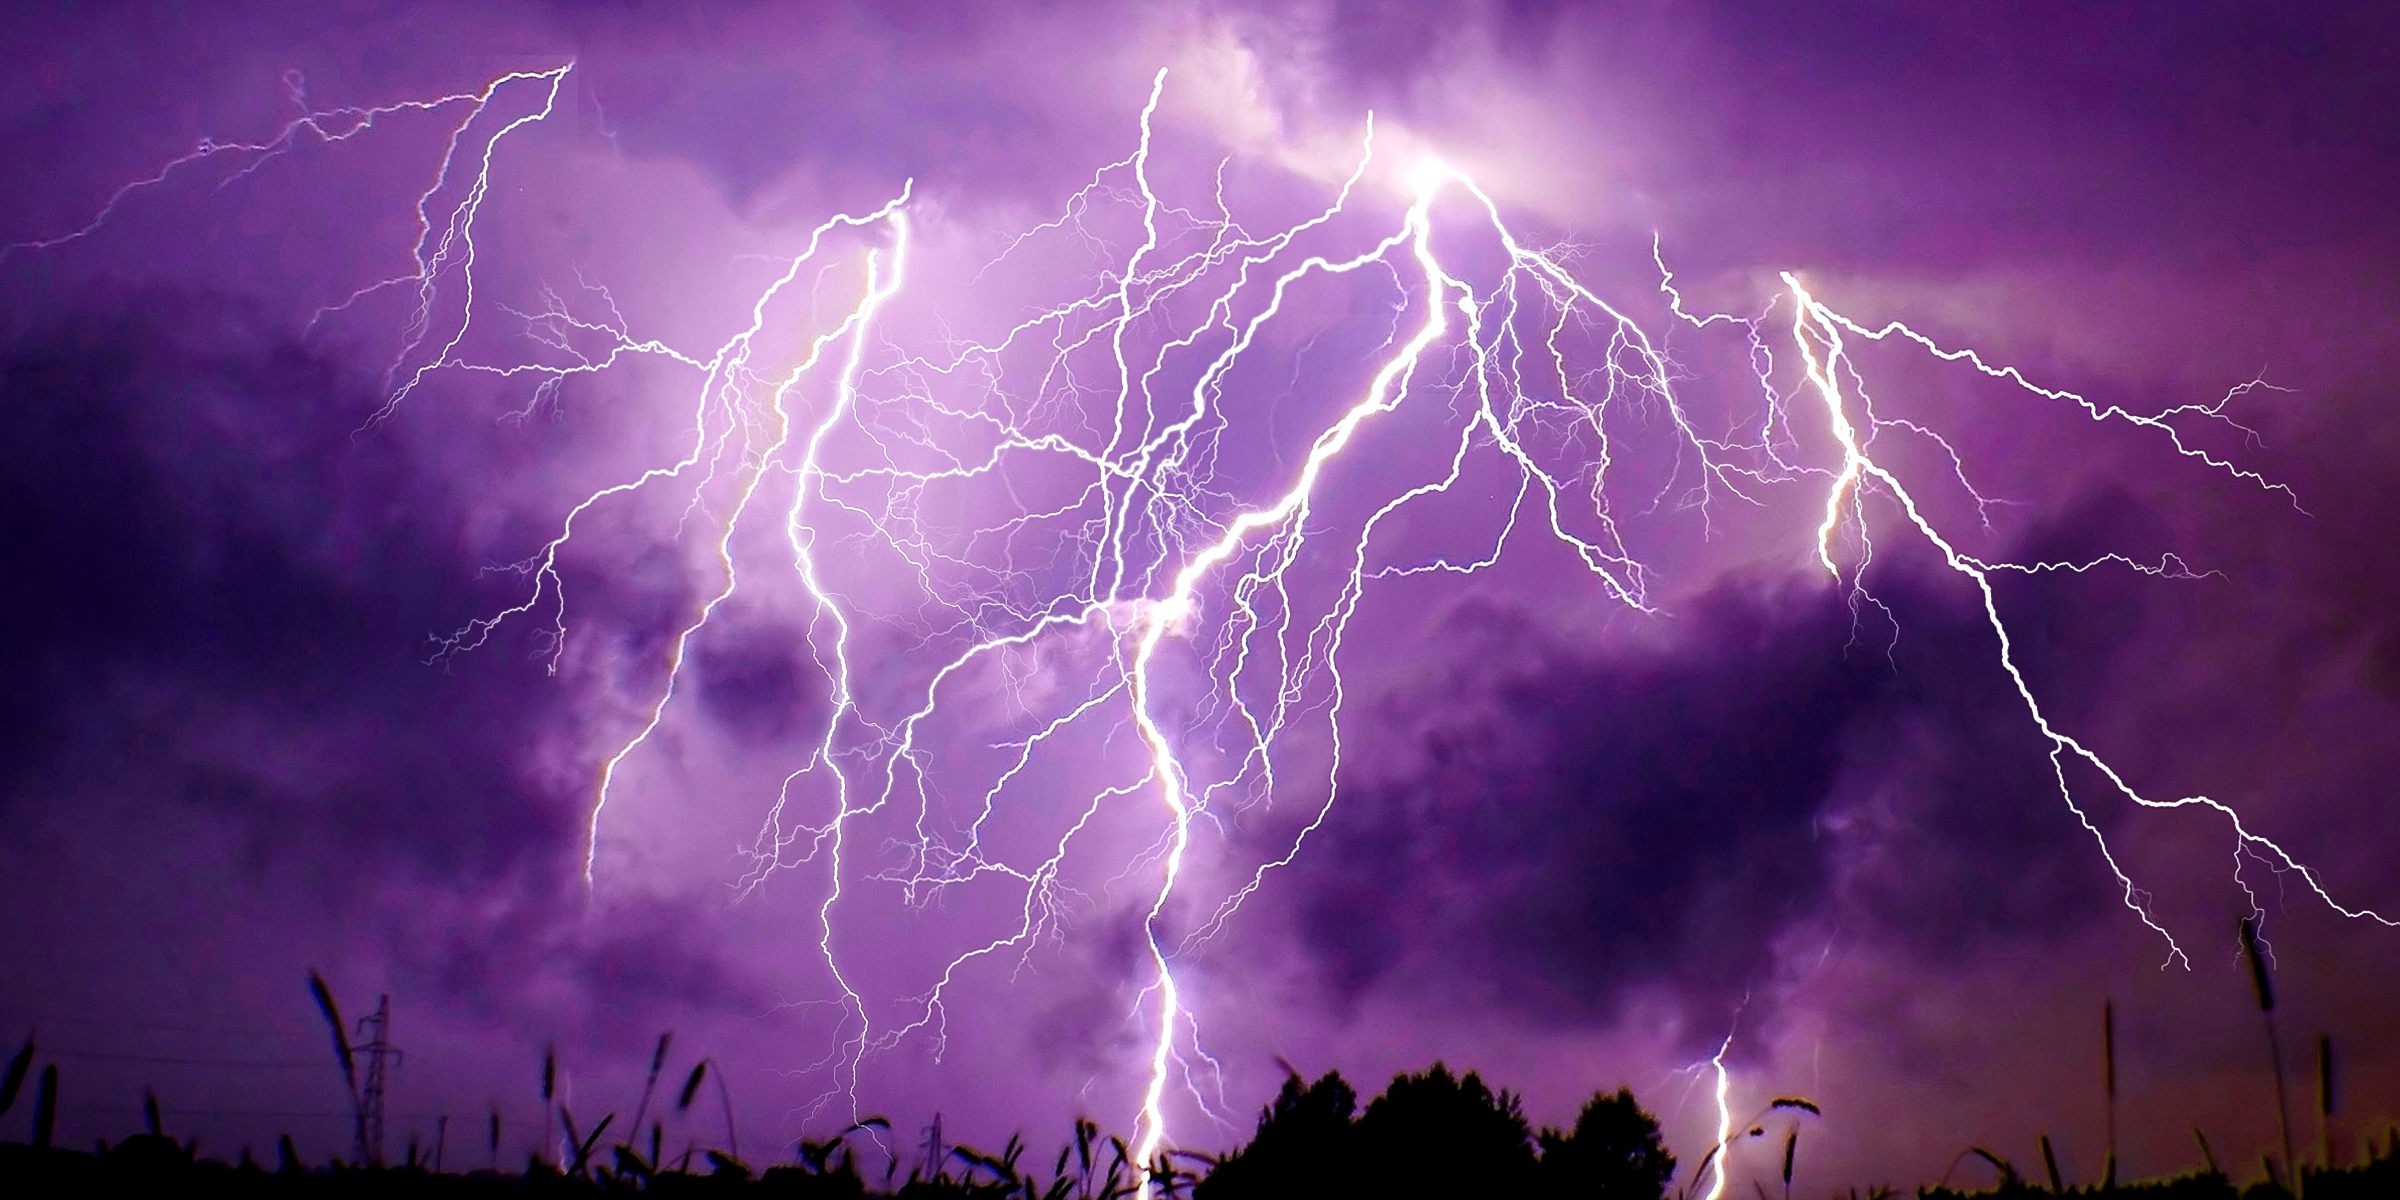 Thunderstorm in the sky | Source: Shutterstock